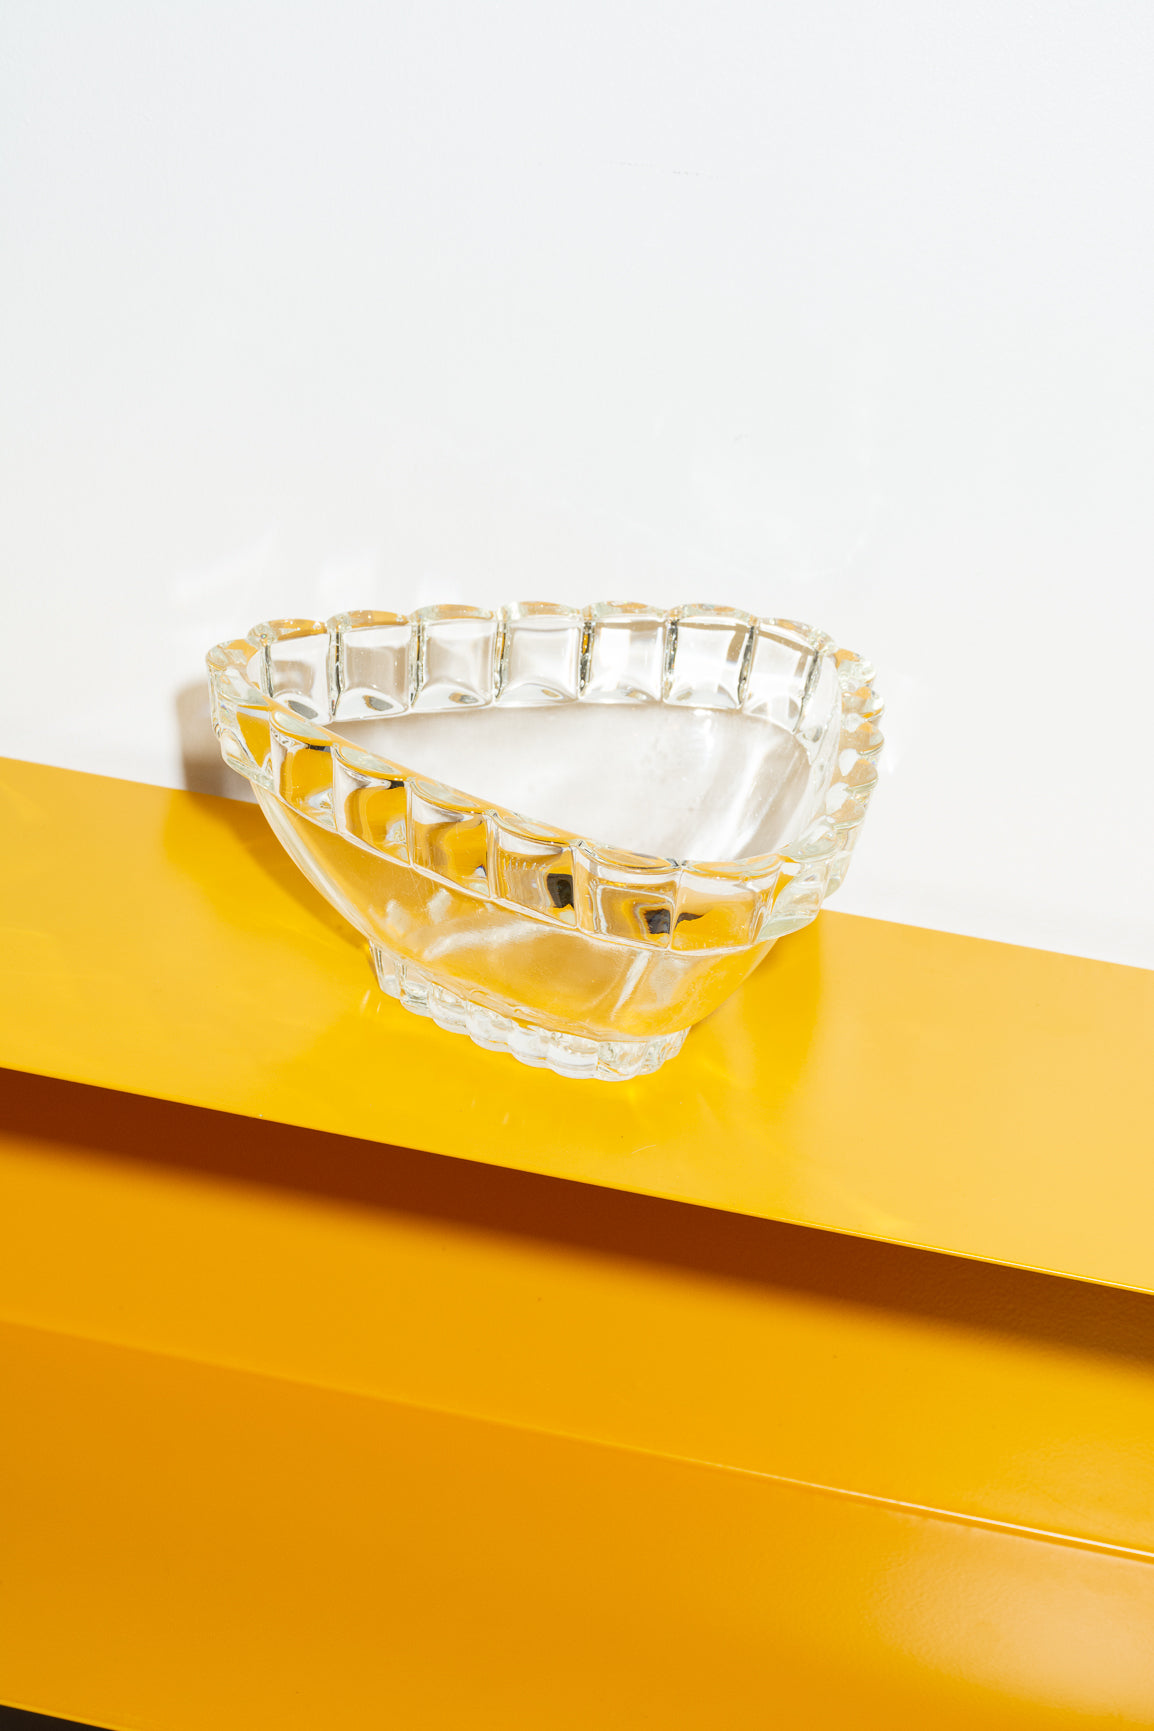 Triangular glass bowl with scalloping rim detail